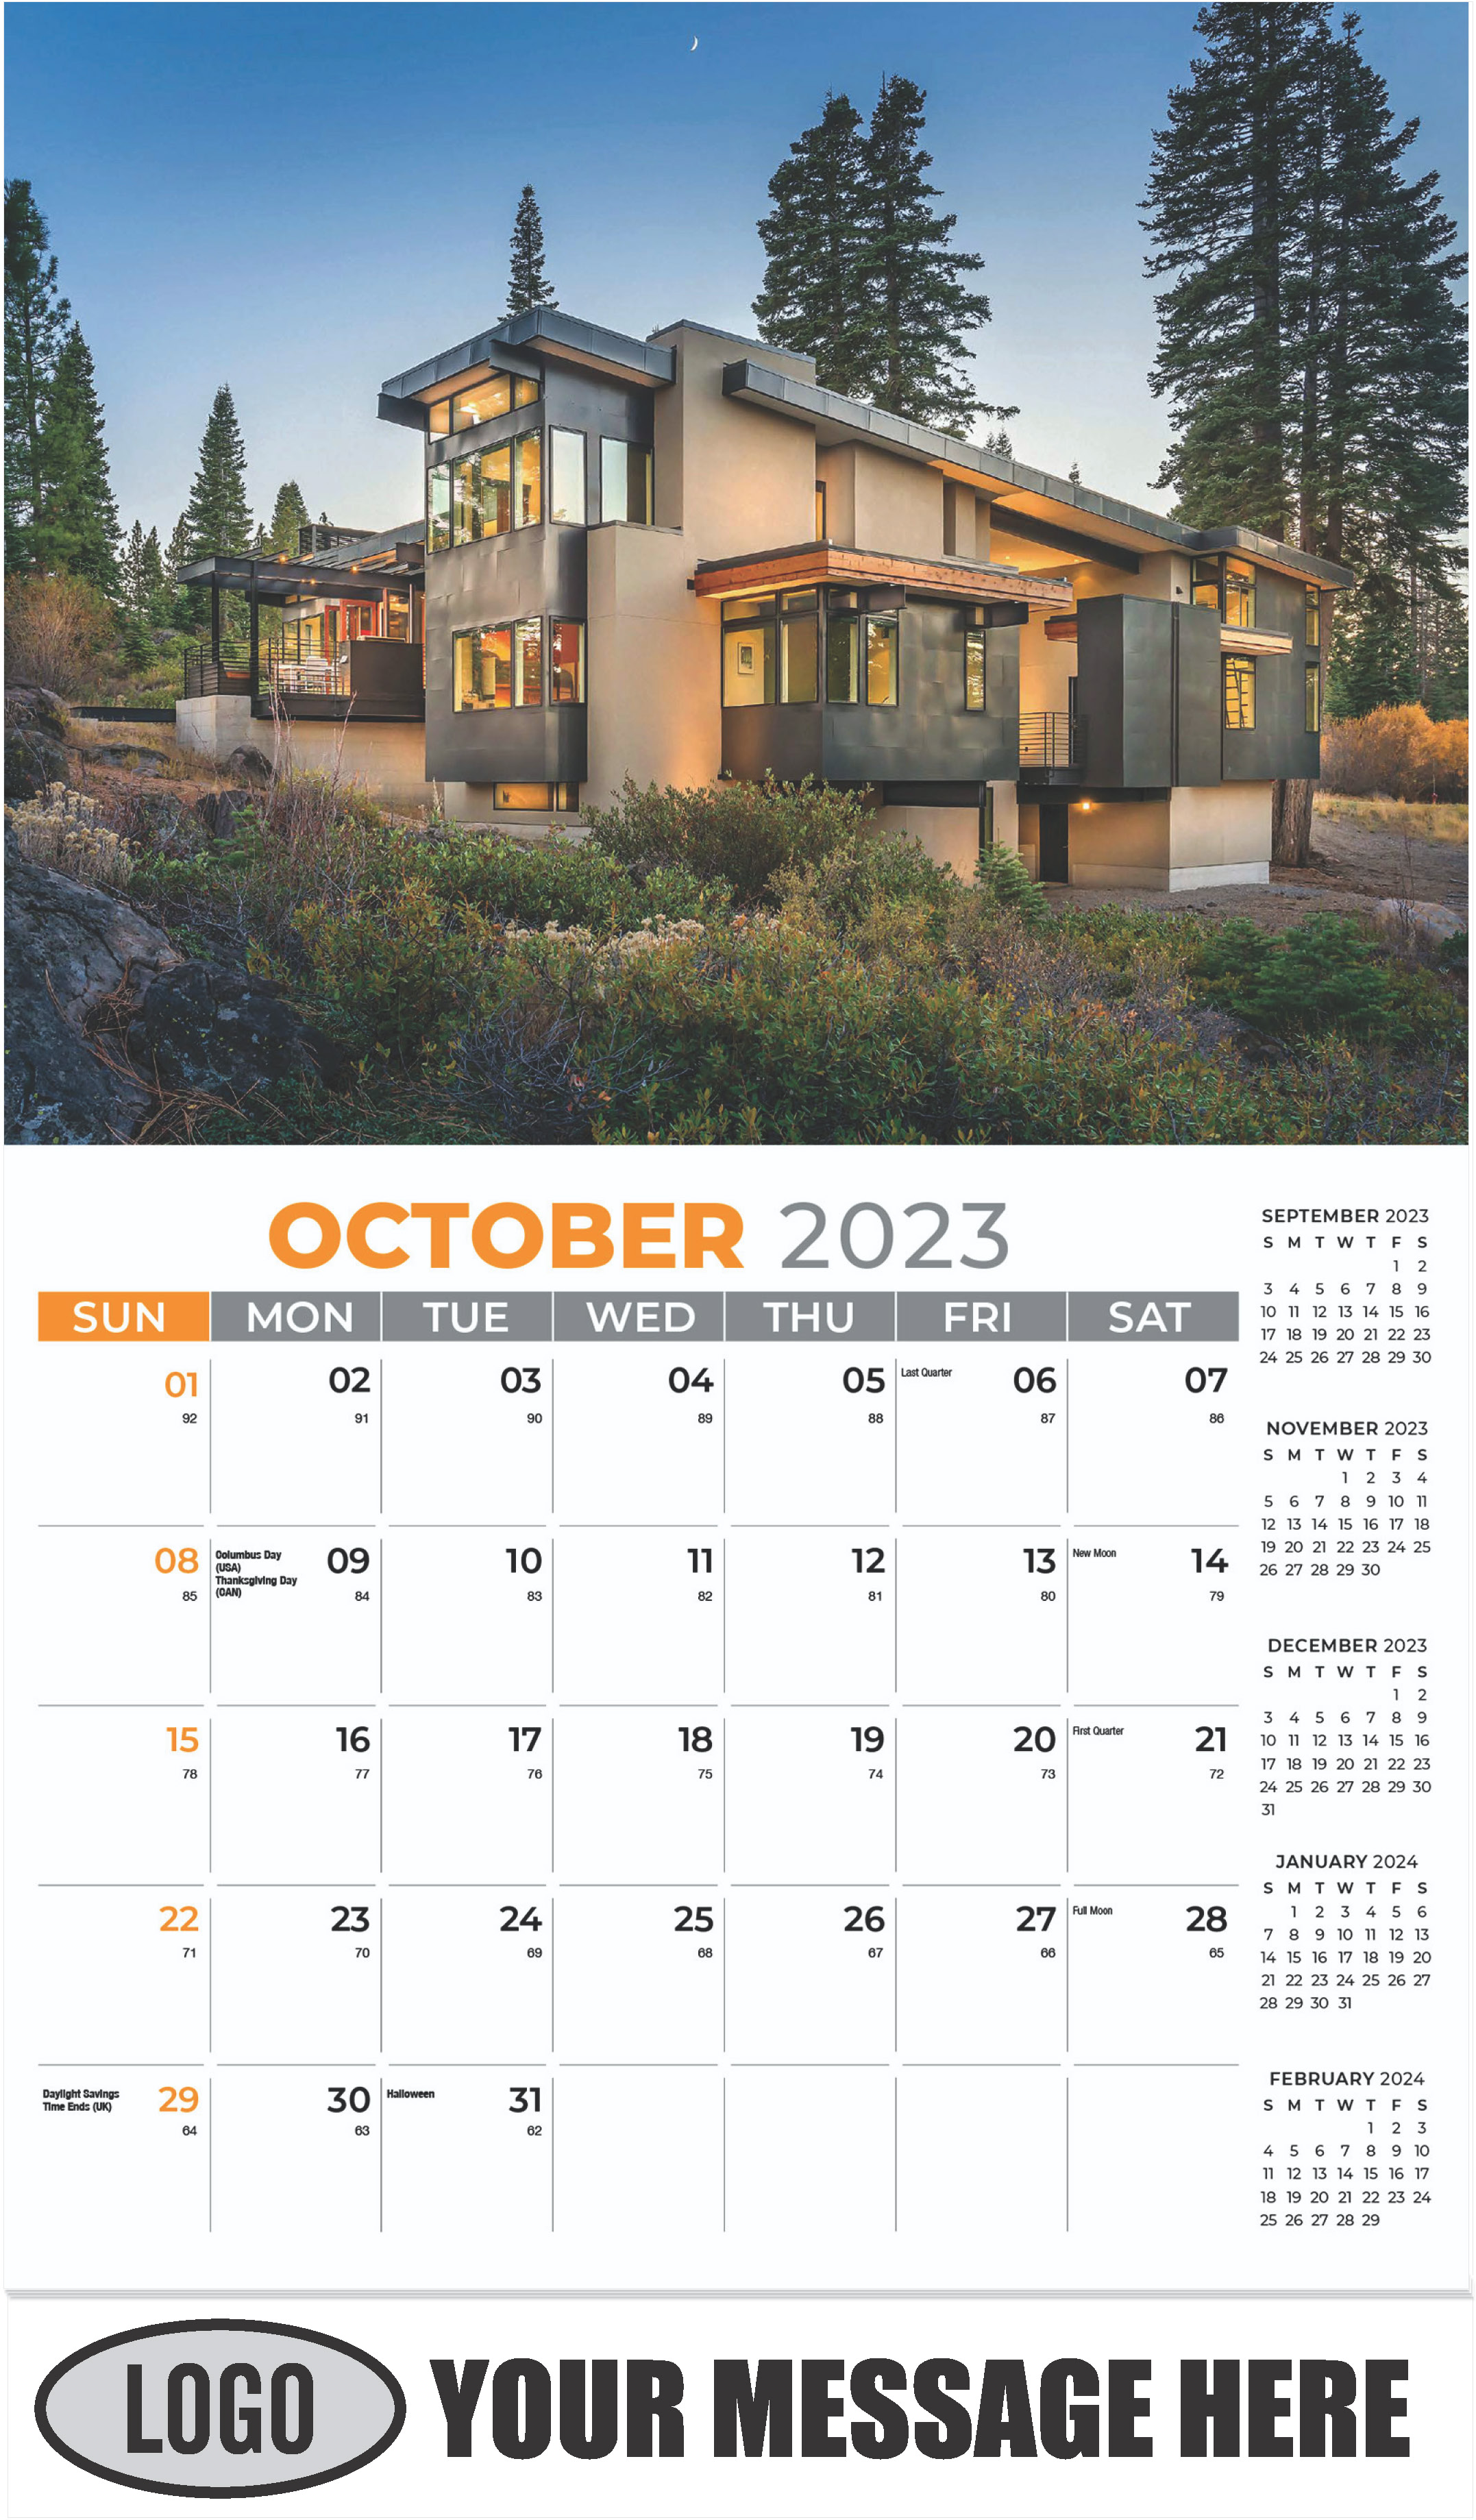 Luxury Homes Calendar - October - Homes 2023 Promotional Calendar